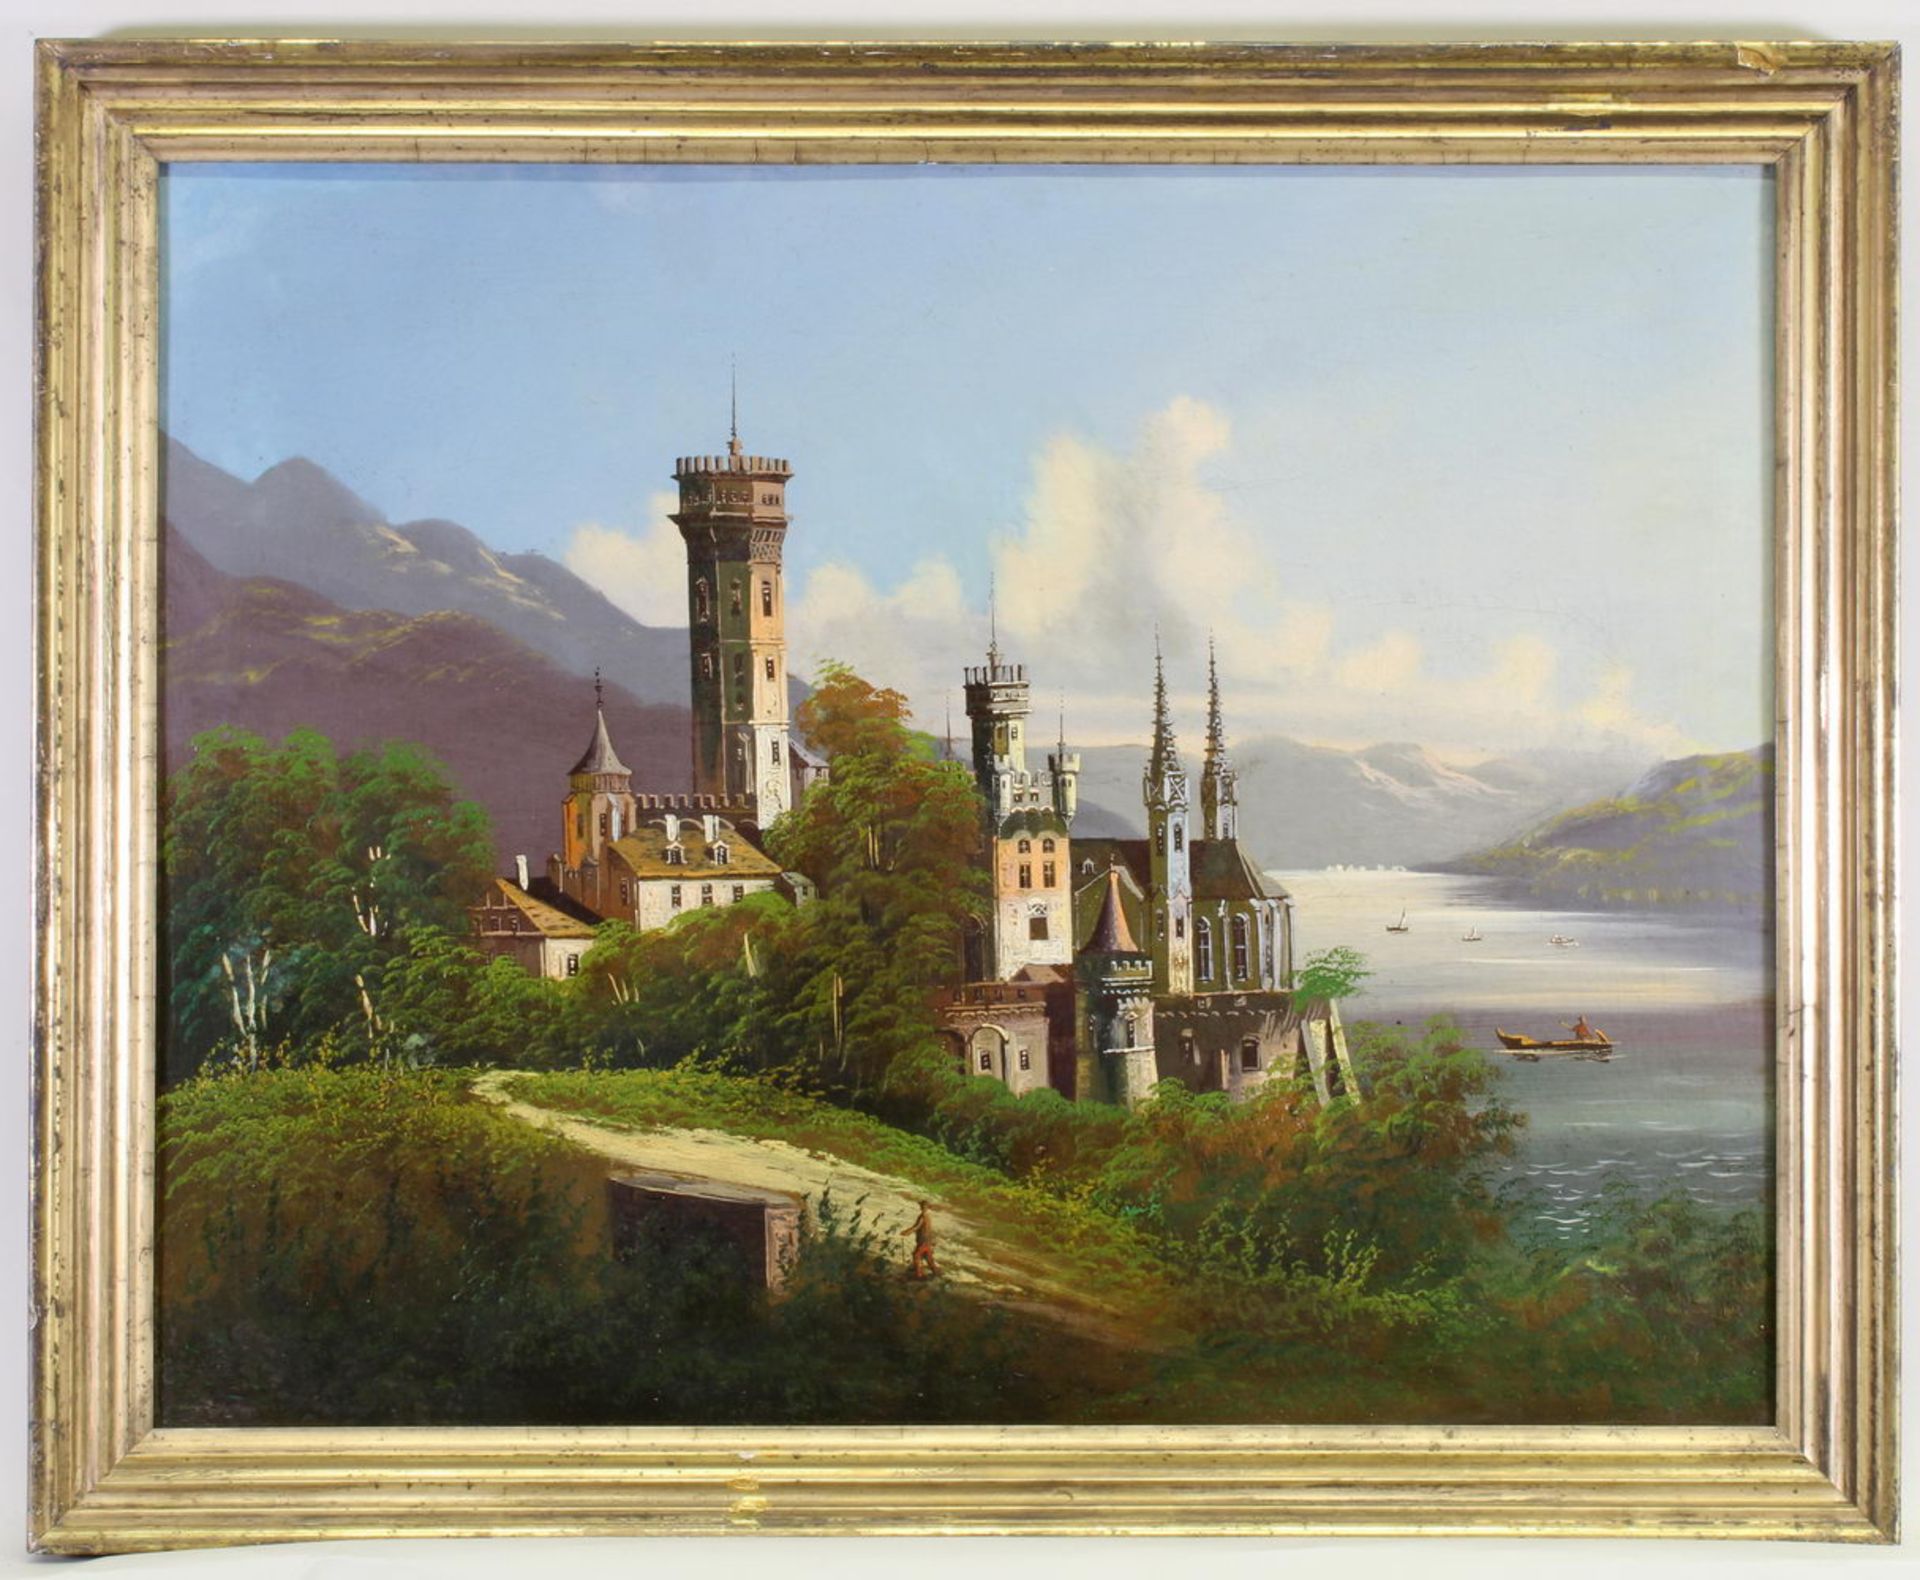 Landschaftsmaler (19. Jh.) "Burg Stolzenfels", Öl auf Leinwand, 54 x 68 cm - Image 2 of 3